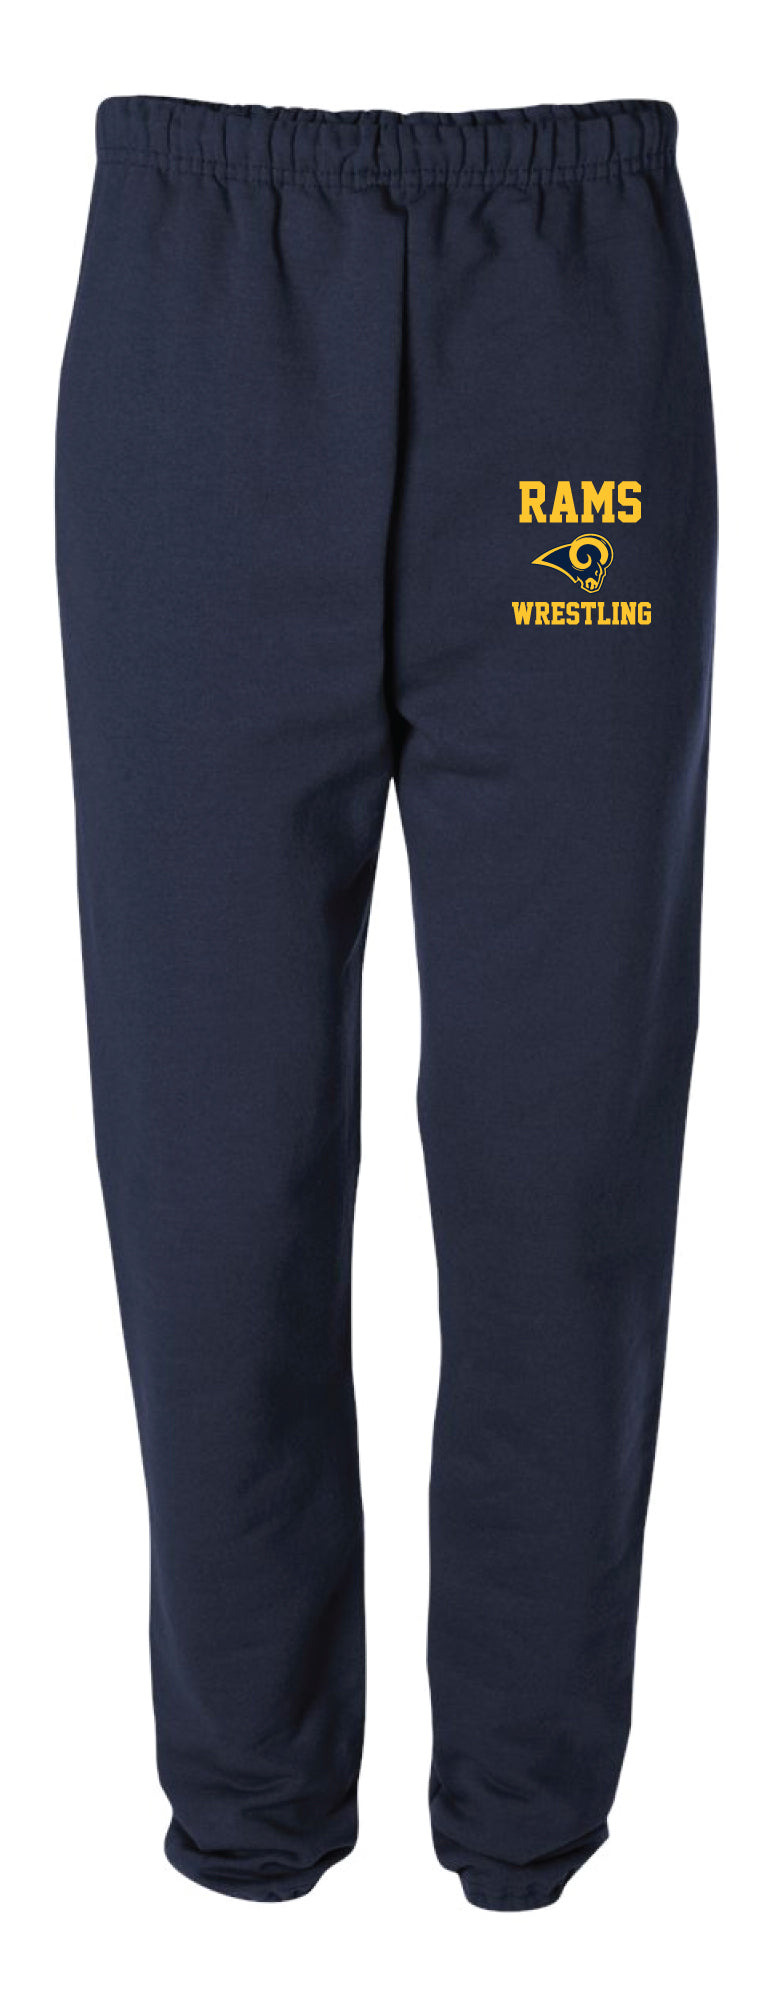 Del Val Wrestling Cotton Sweatpants - Navy - 5KounT2018